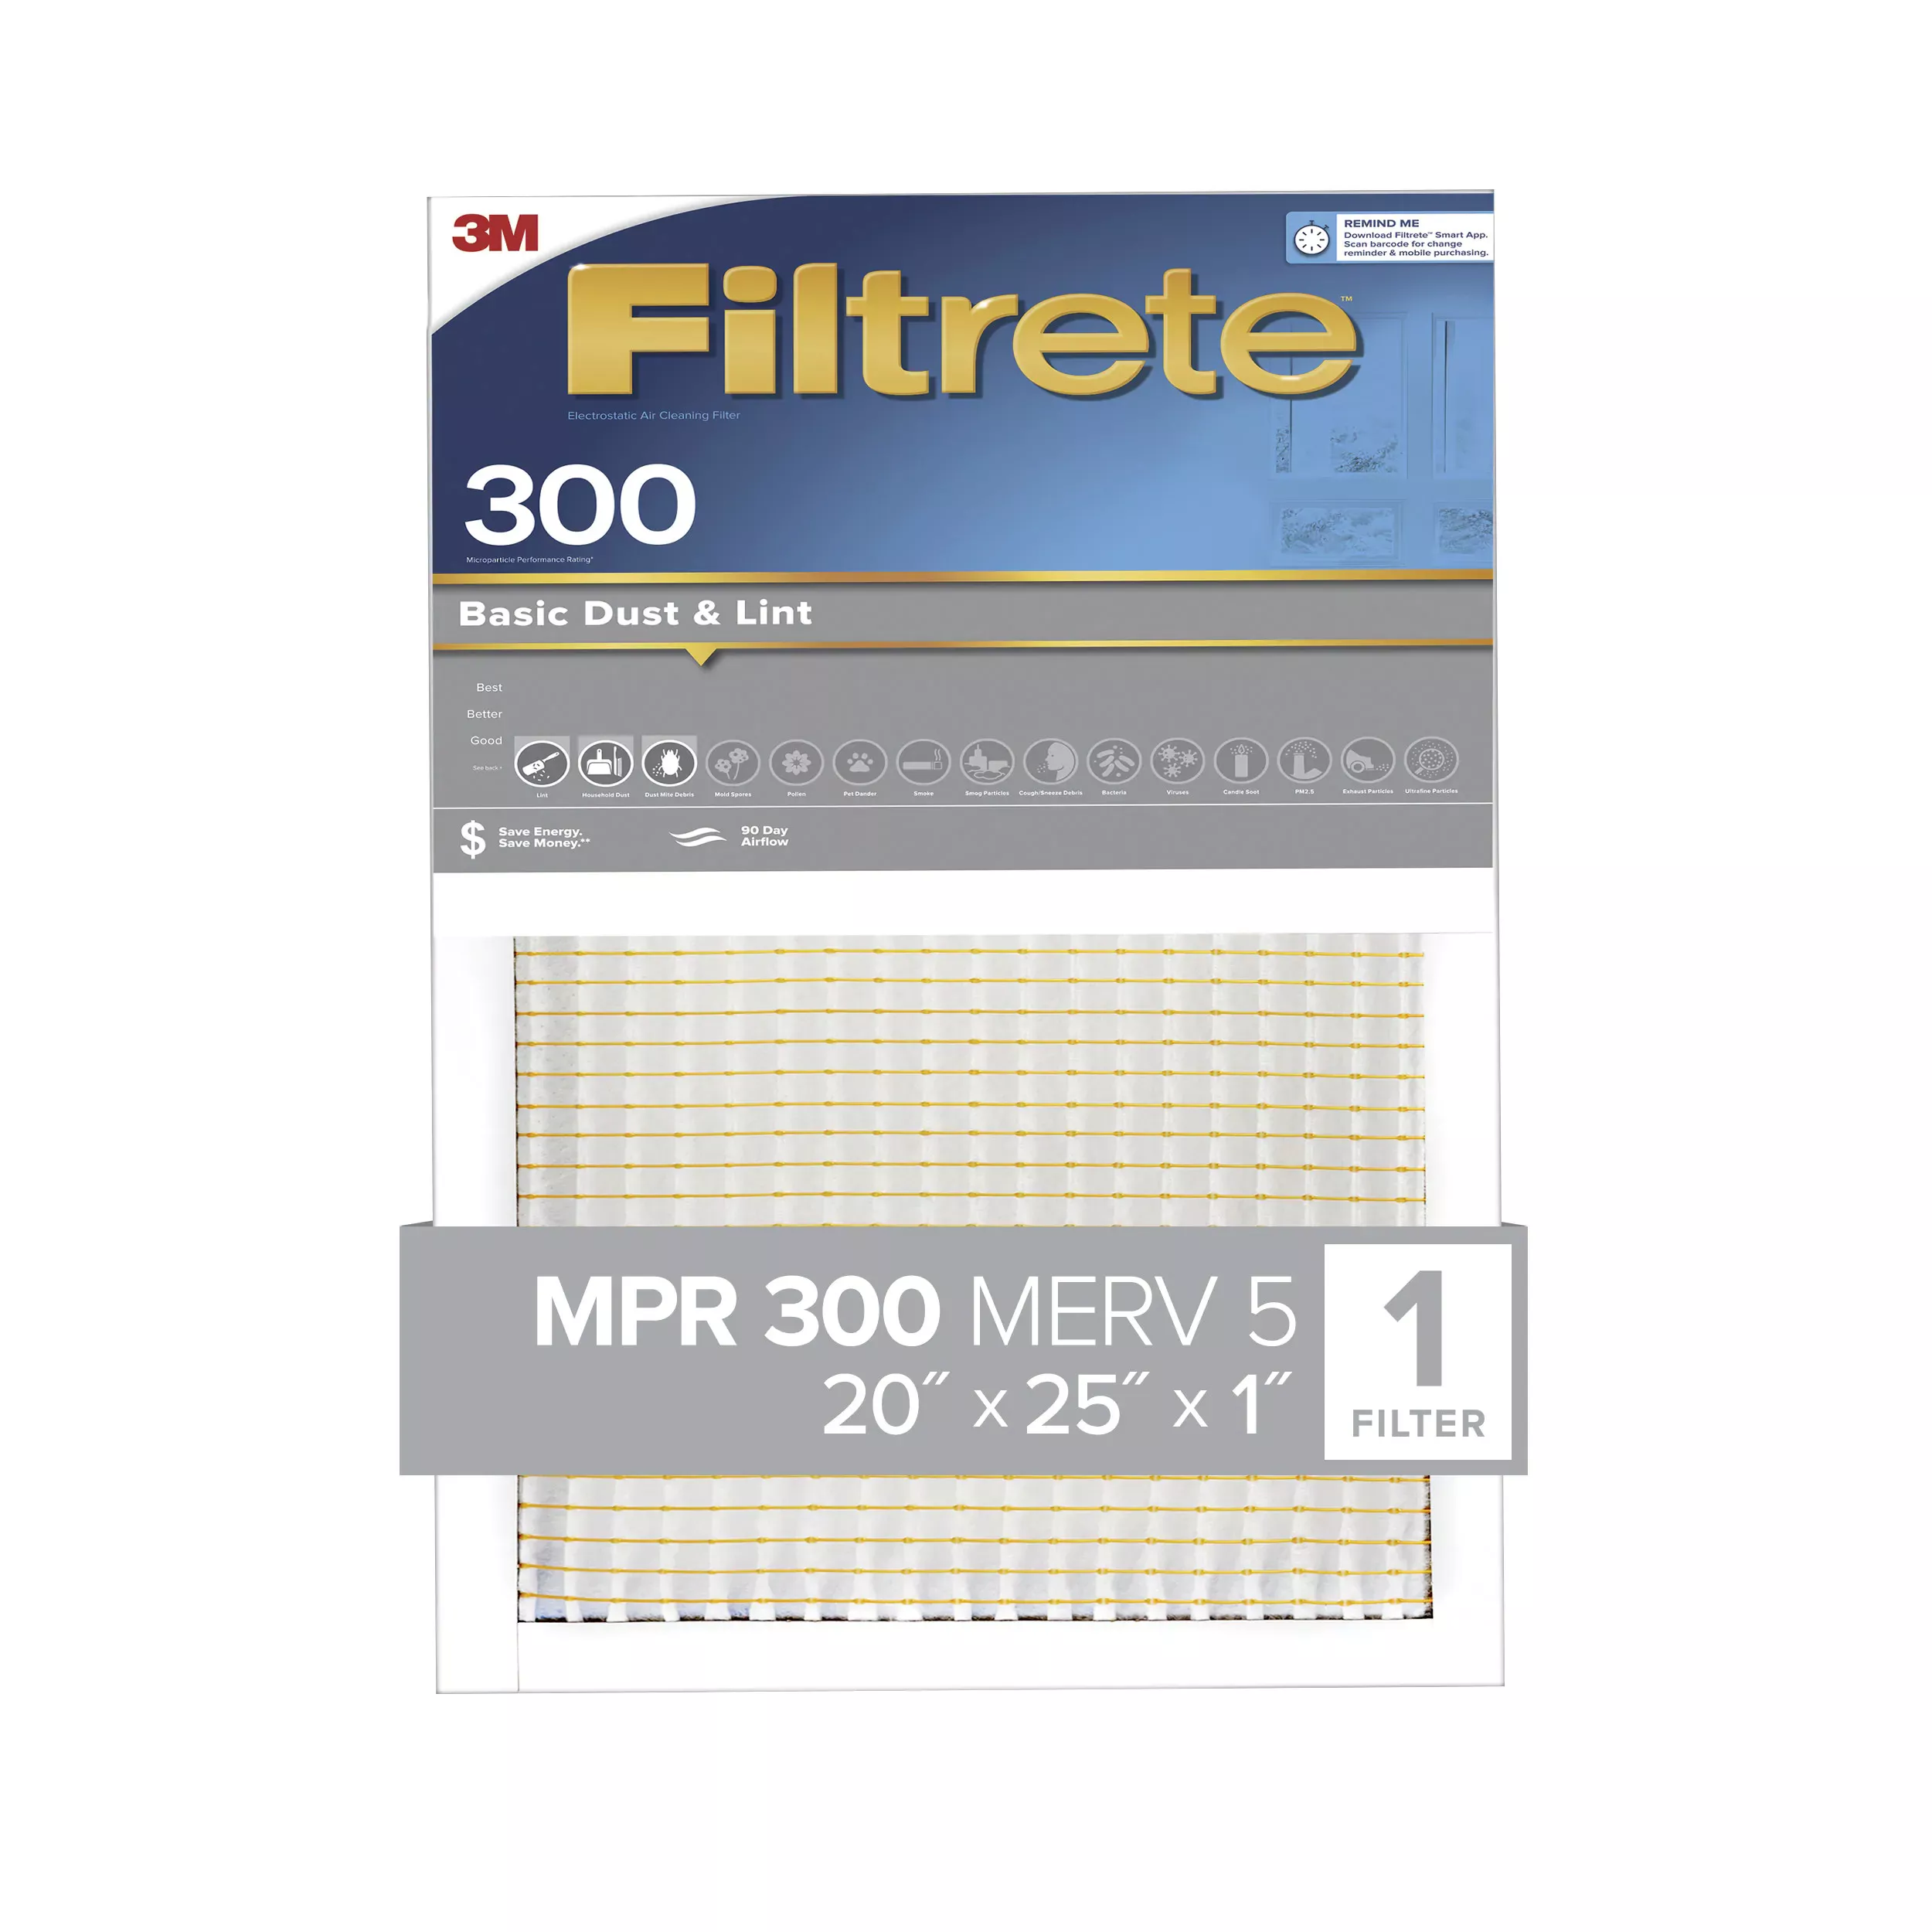 Filtrete™ Basic Dust & Lint Air Filter, 300 MPR, 303-4, 20 in x 25 in x
1 in (50.8 cm x 63.5 cm x 2.5 cm)